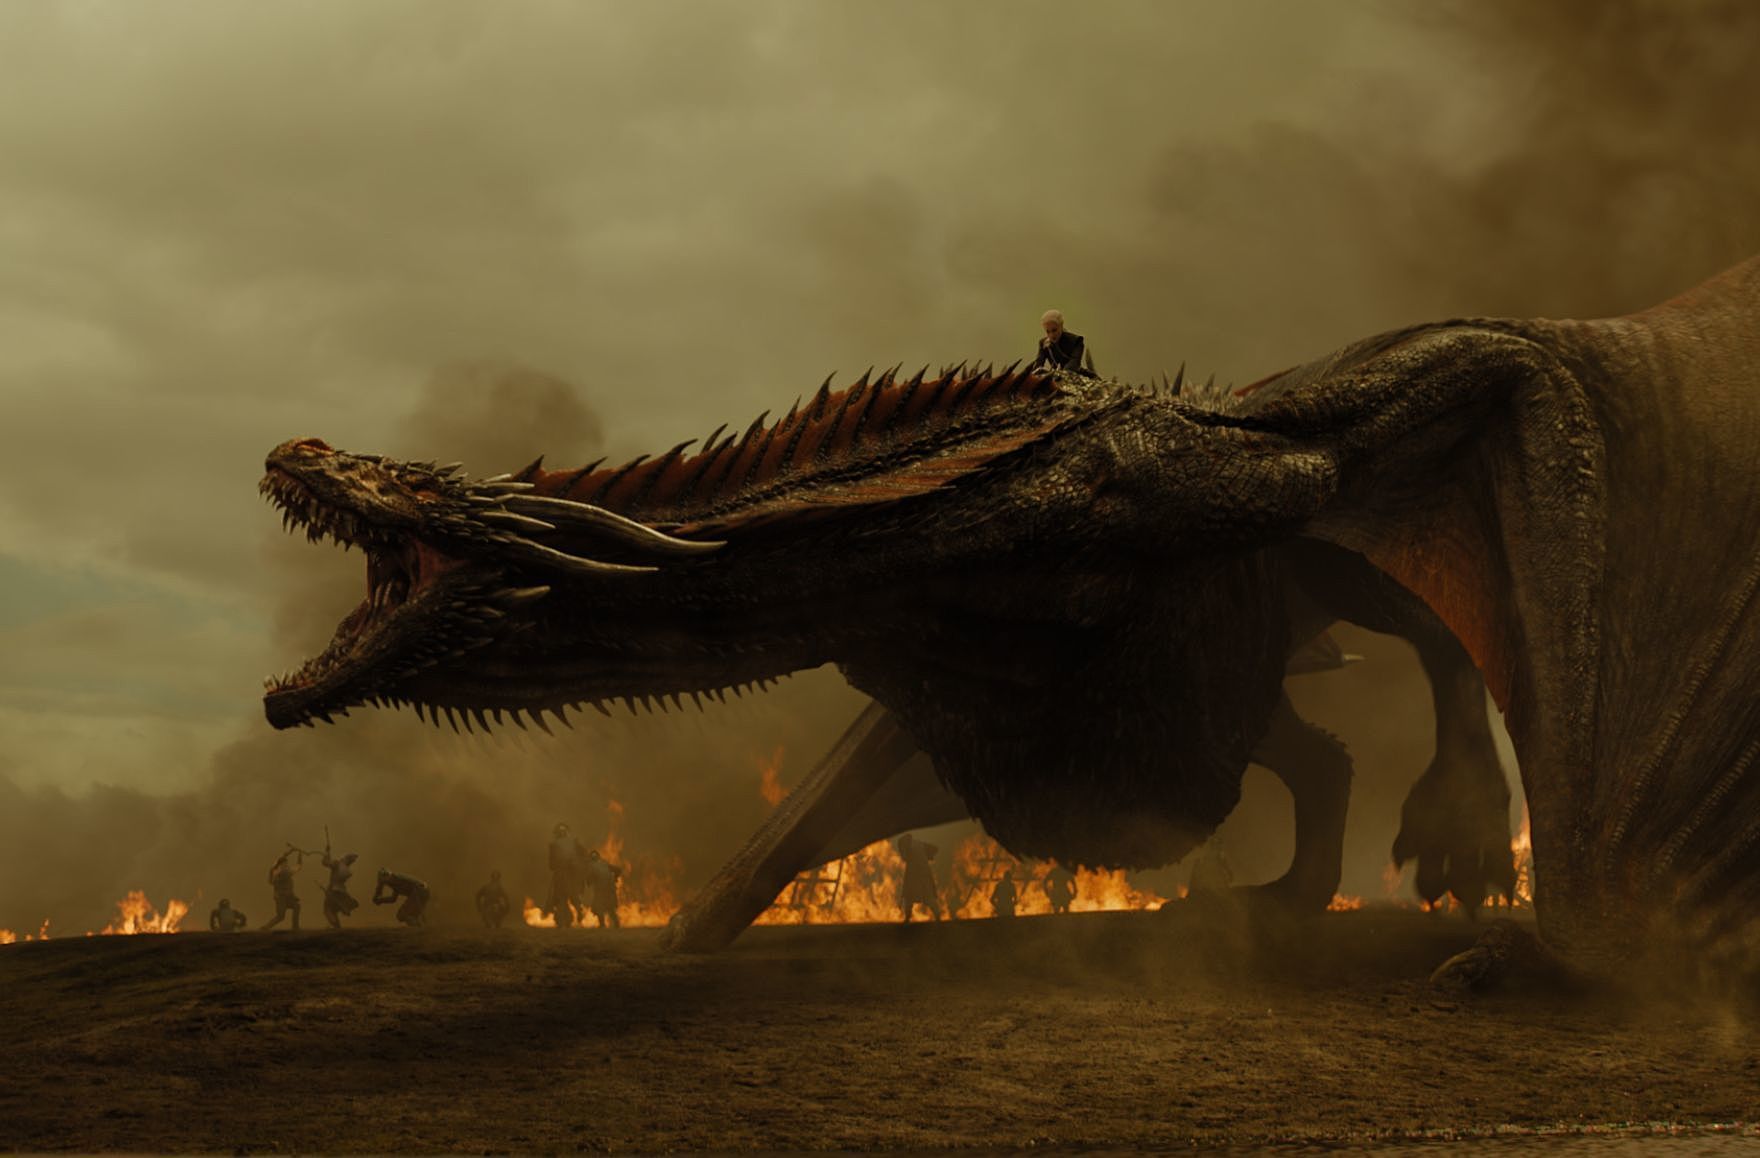 GoT Game Of Thrones House of The Dragon HBO Série estreia spin off